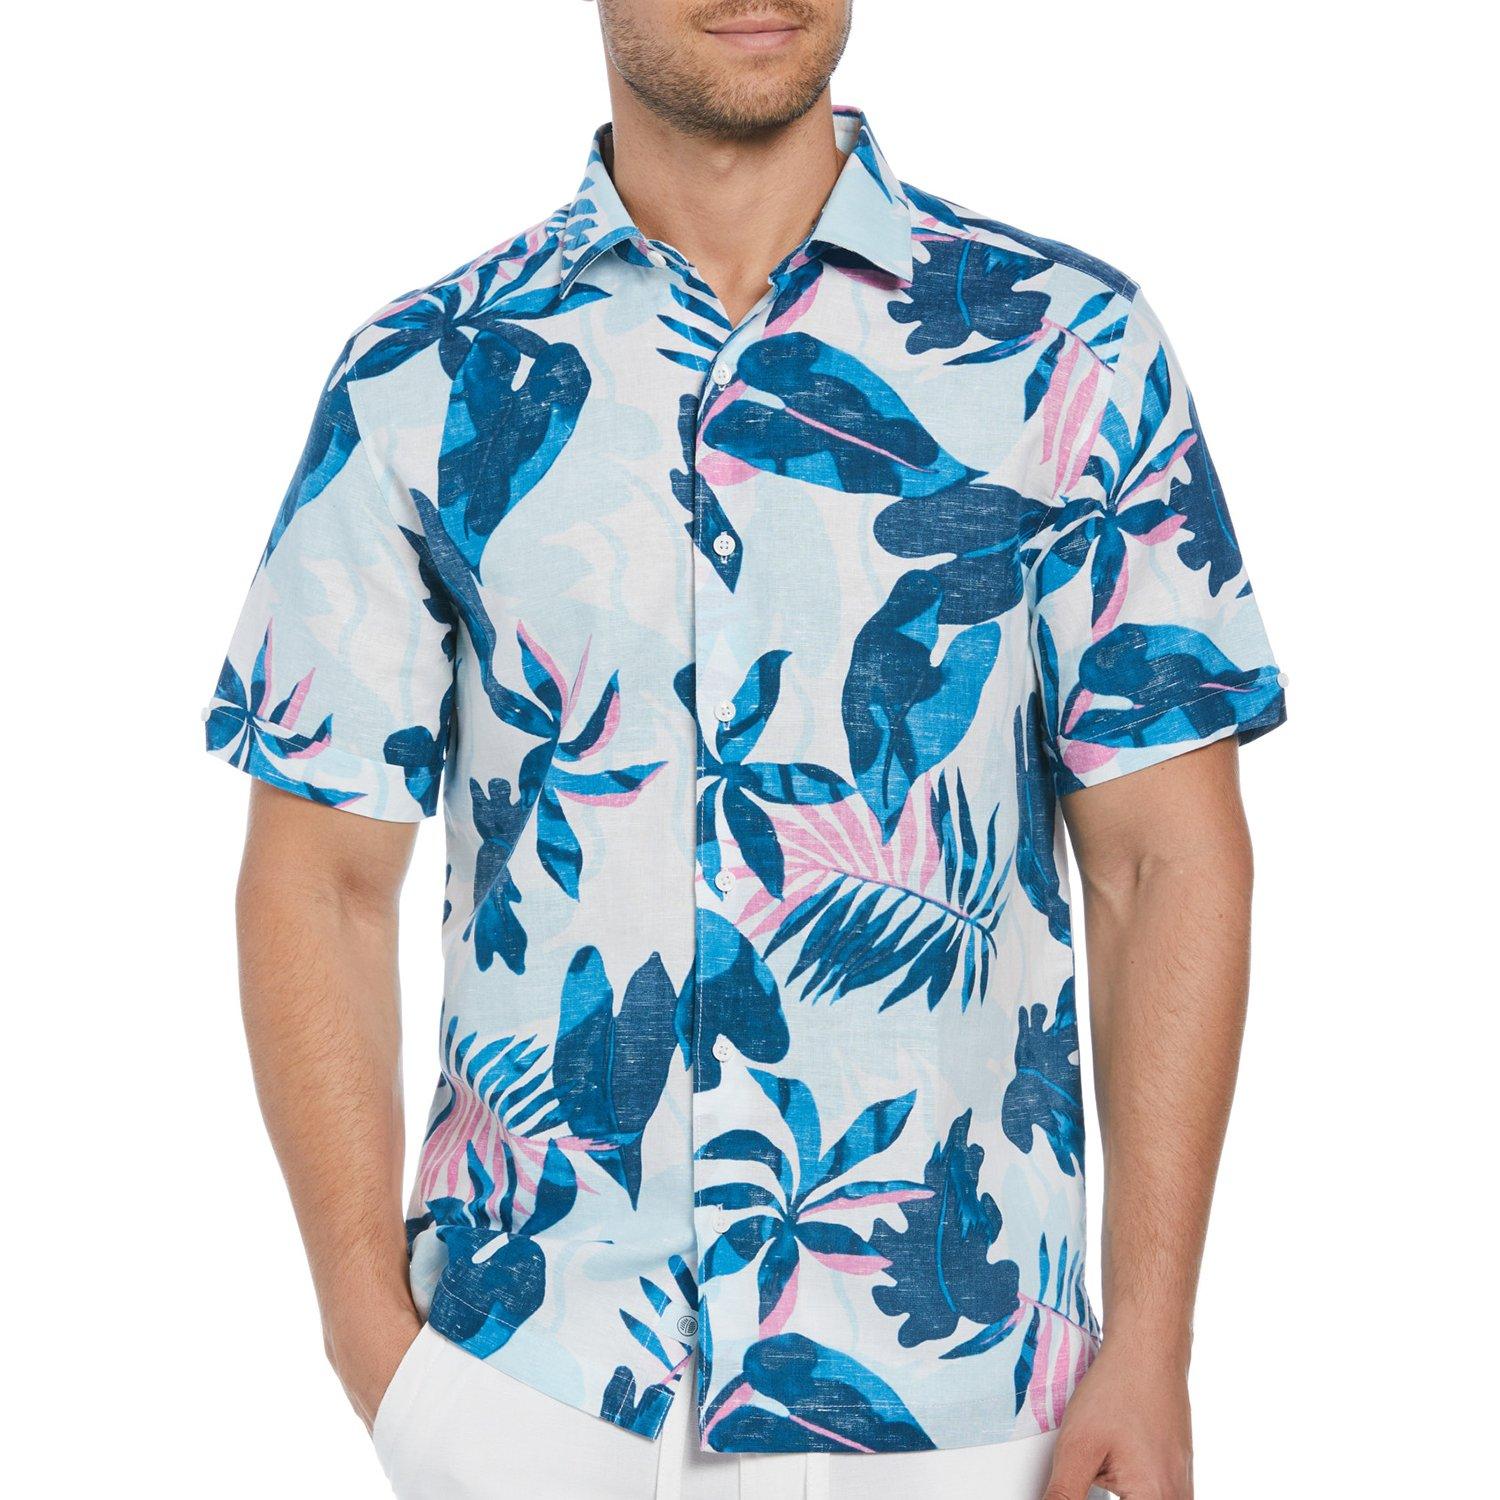 Cubavera Mens Tropical Reverse Woven Button Shirt